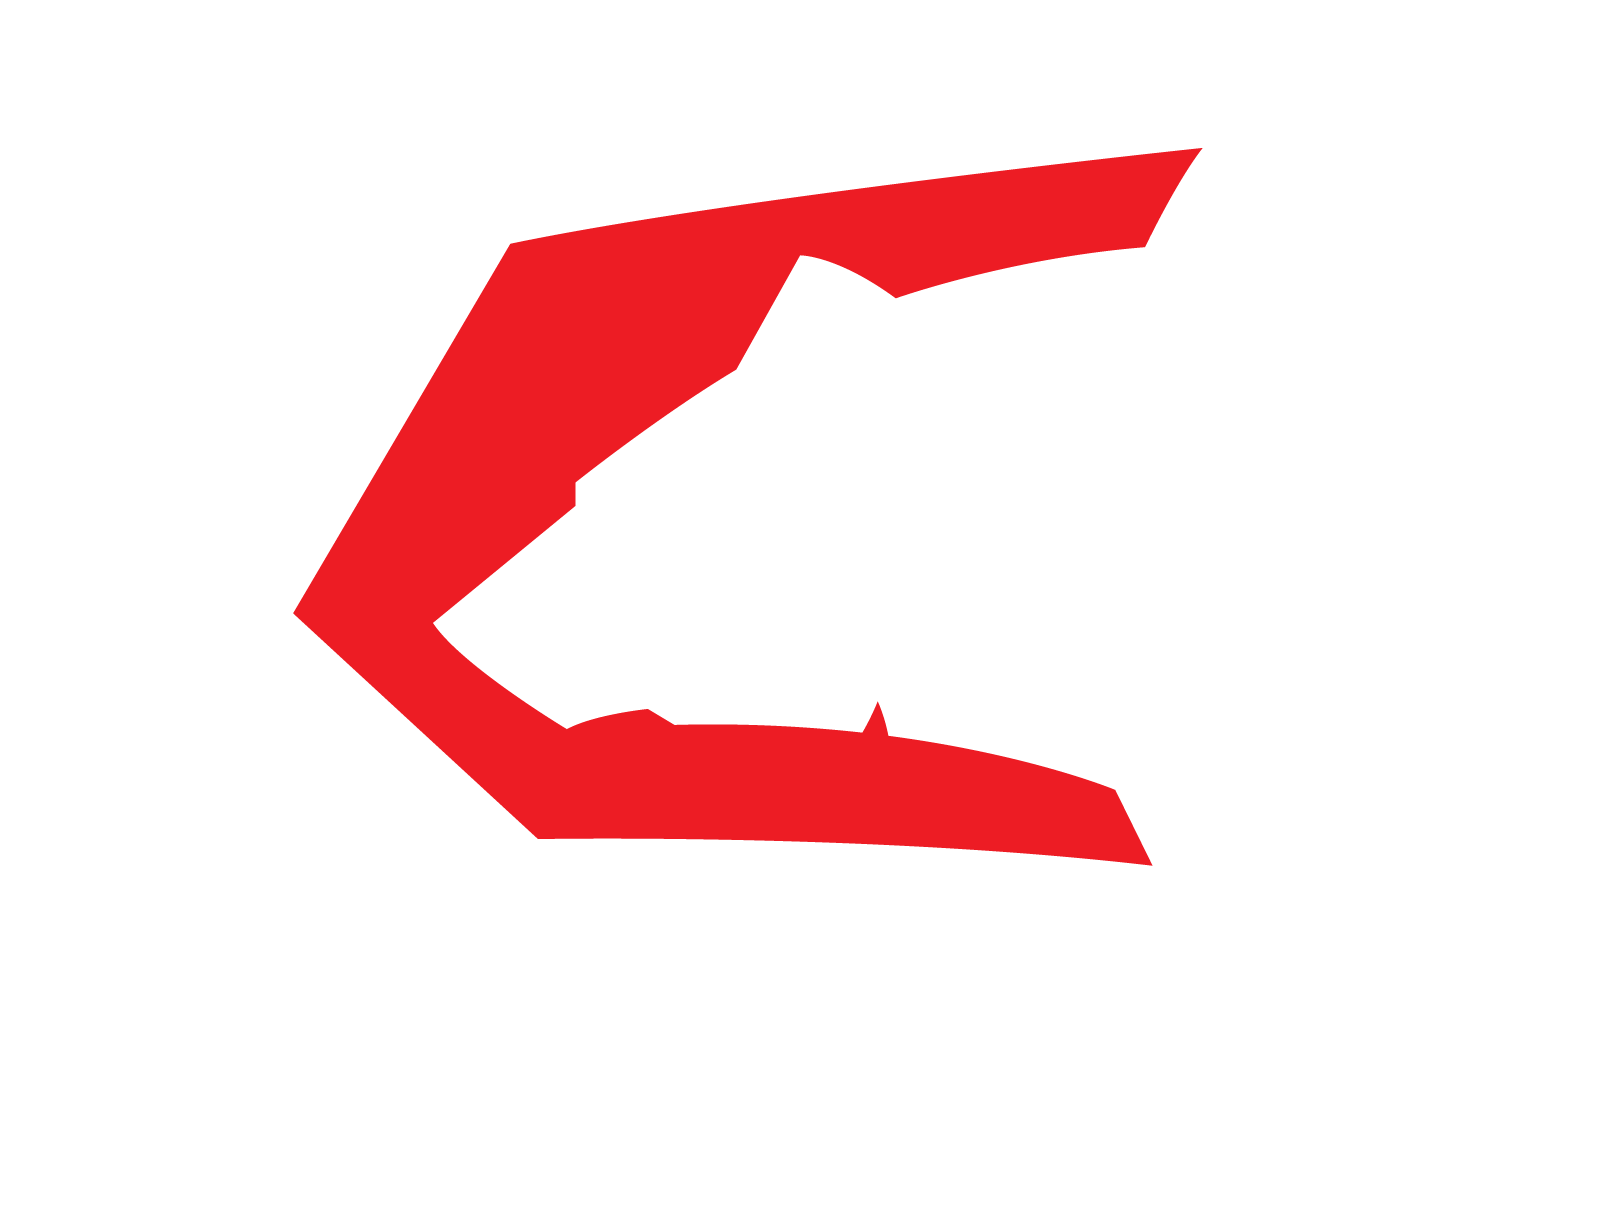 fxpredator logo